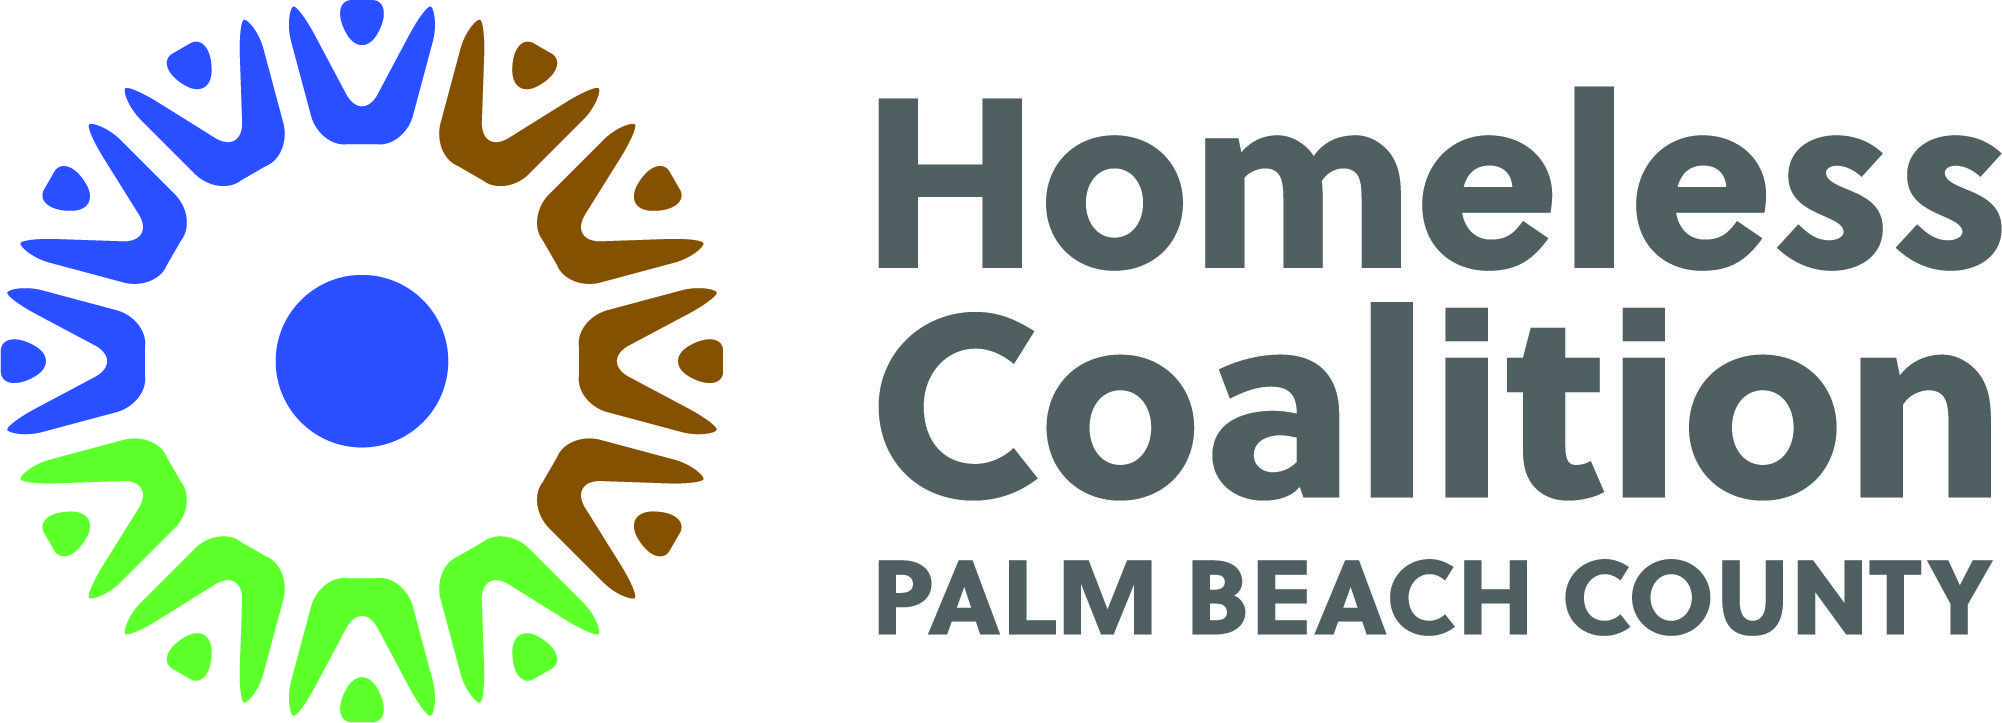 Homeless Logo - Homeless Coalition of Palm Beach County - Home